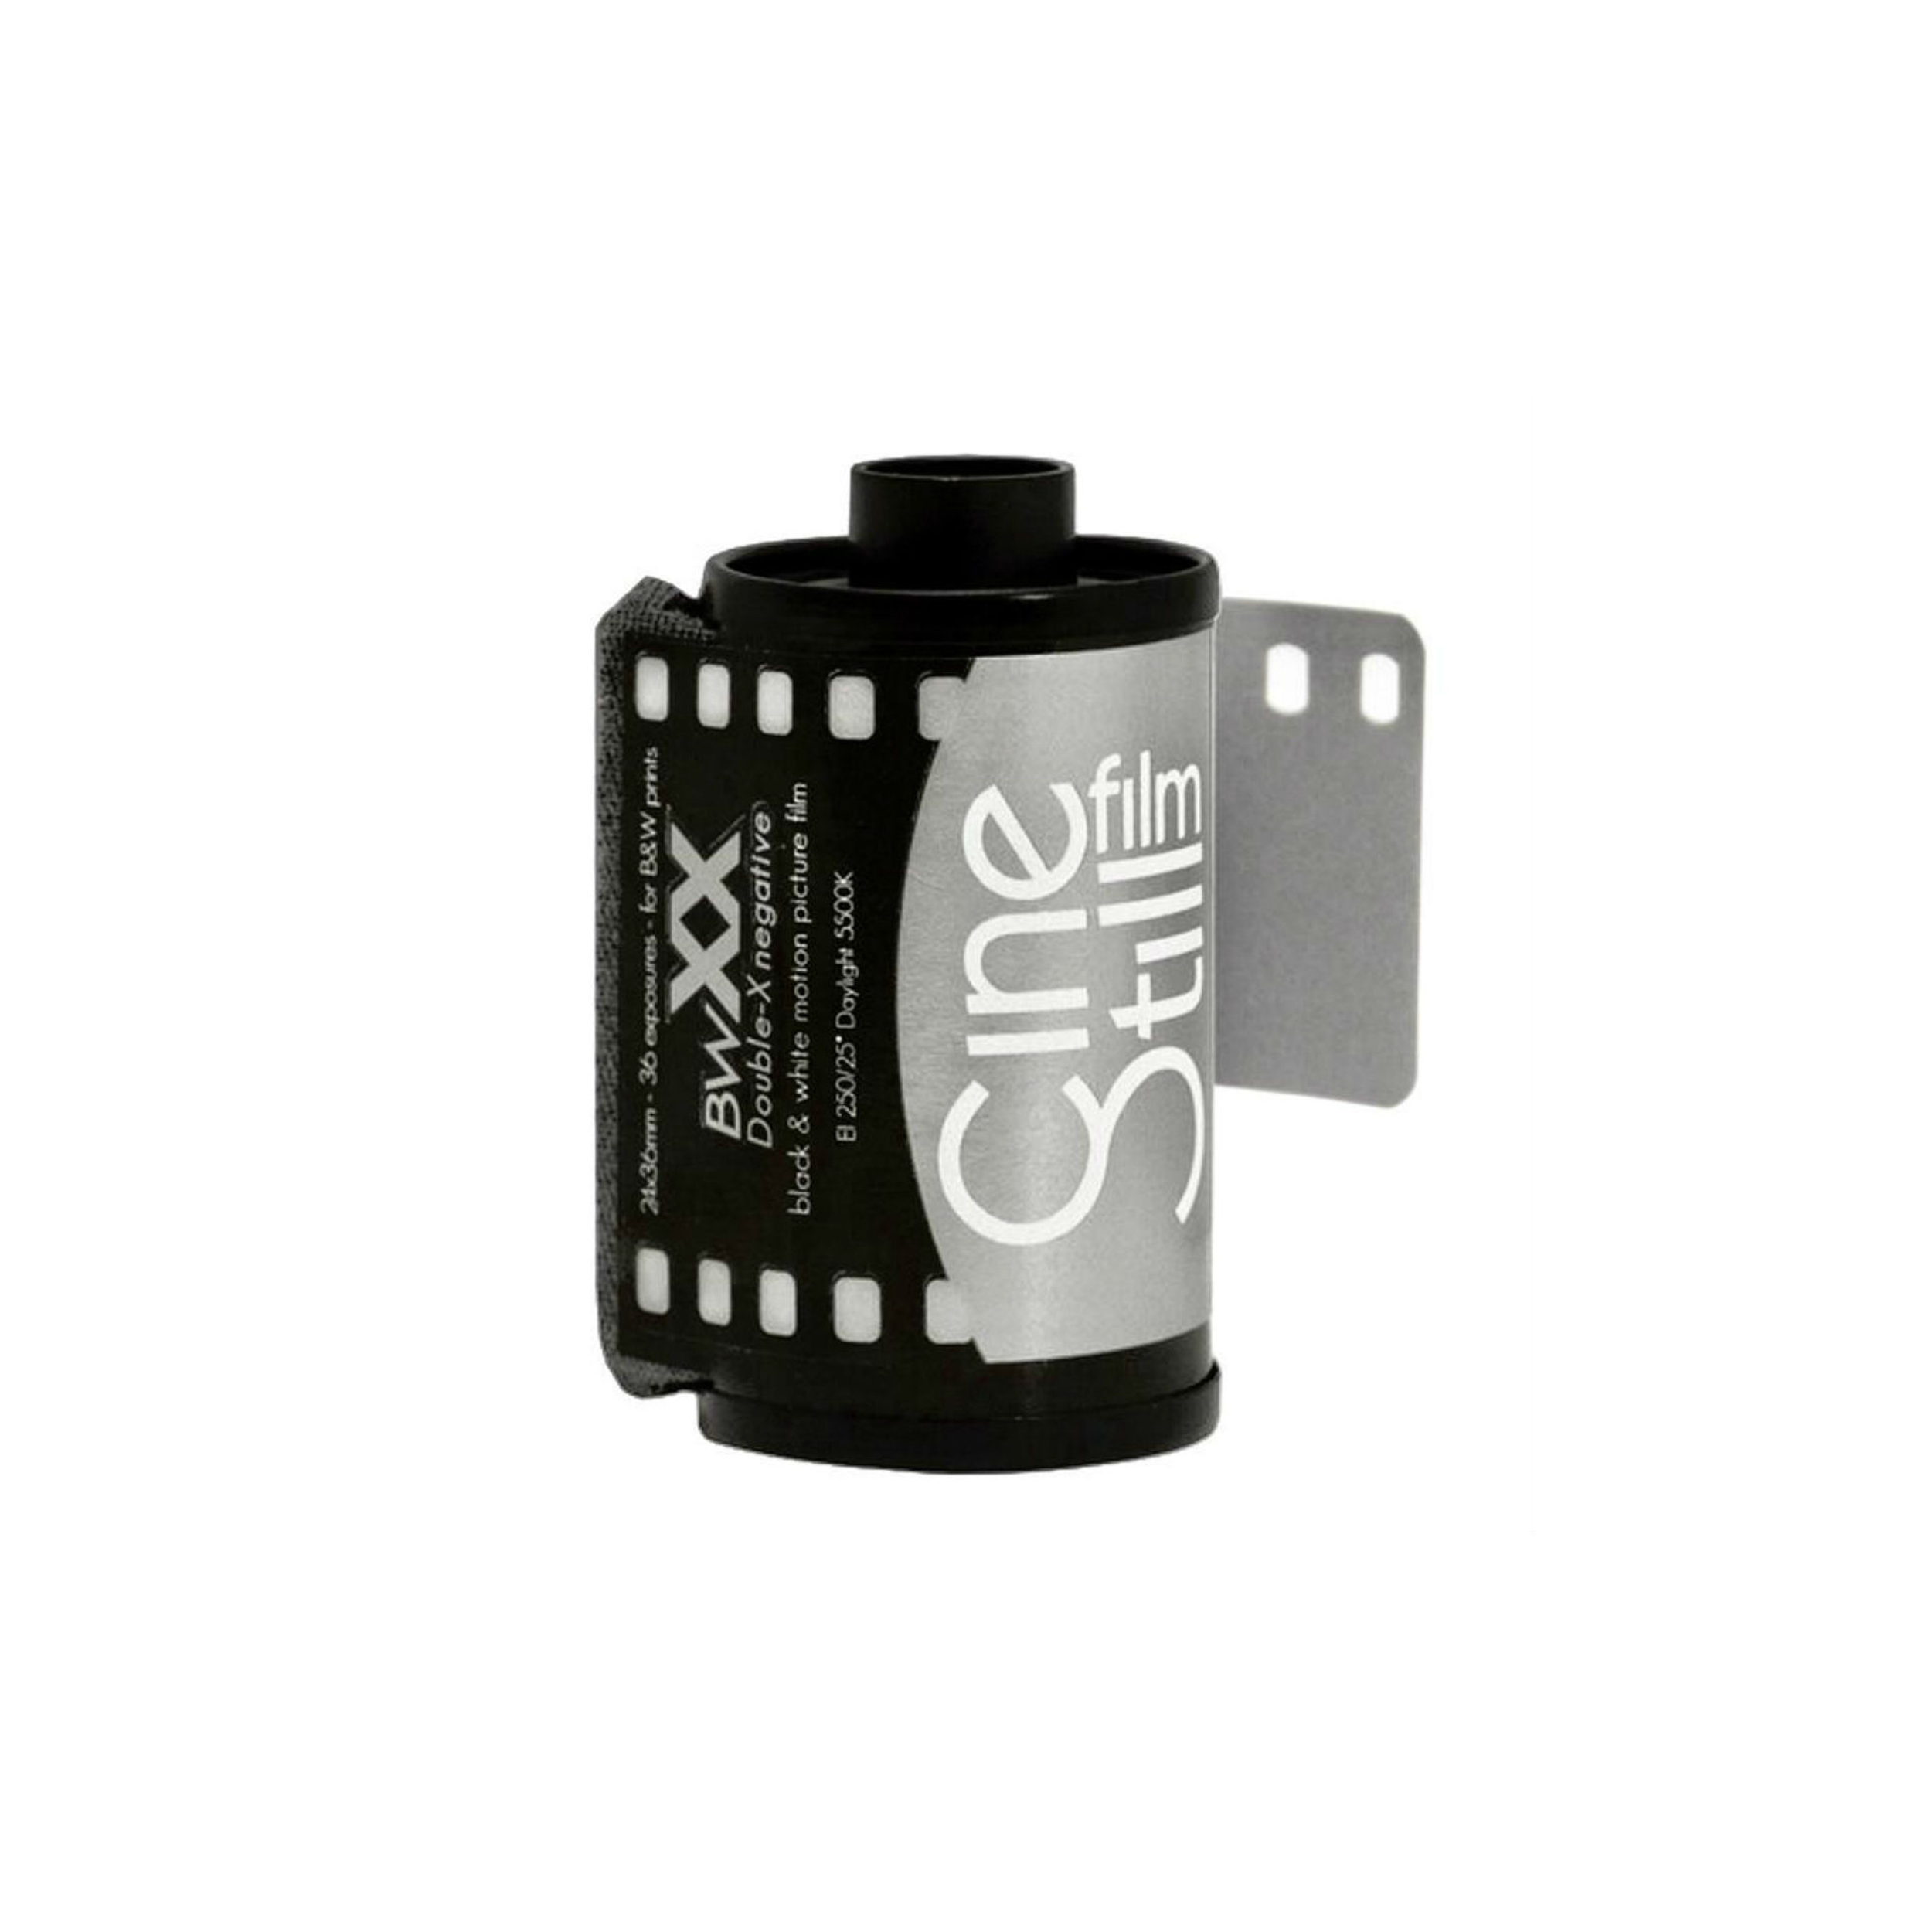 Cinestill BWXX (Double-X) Black & White Negative Film, Iso 250 35mm 36 Exp.